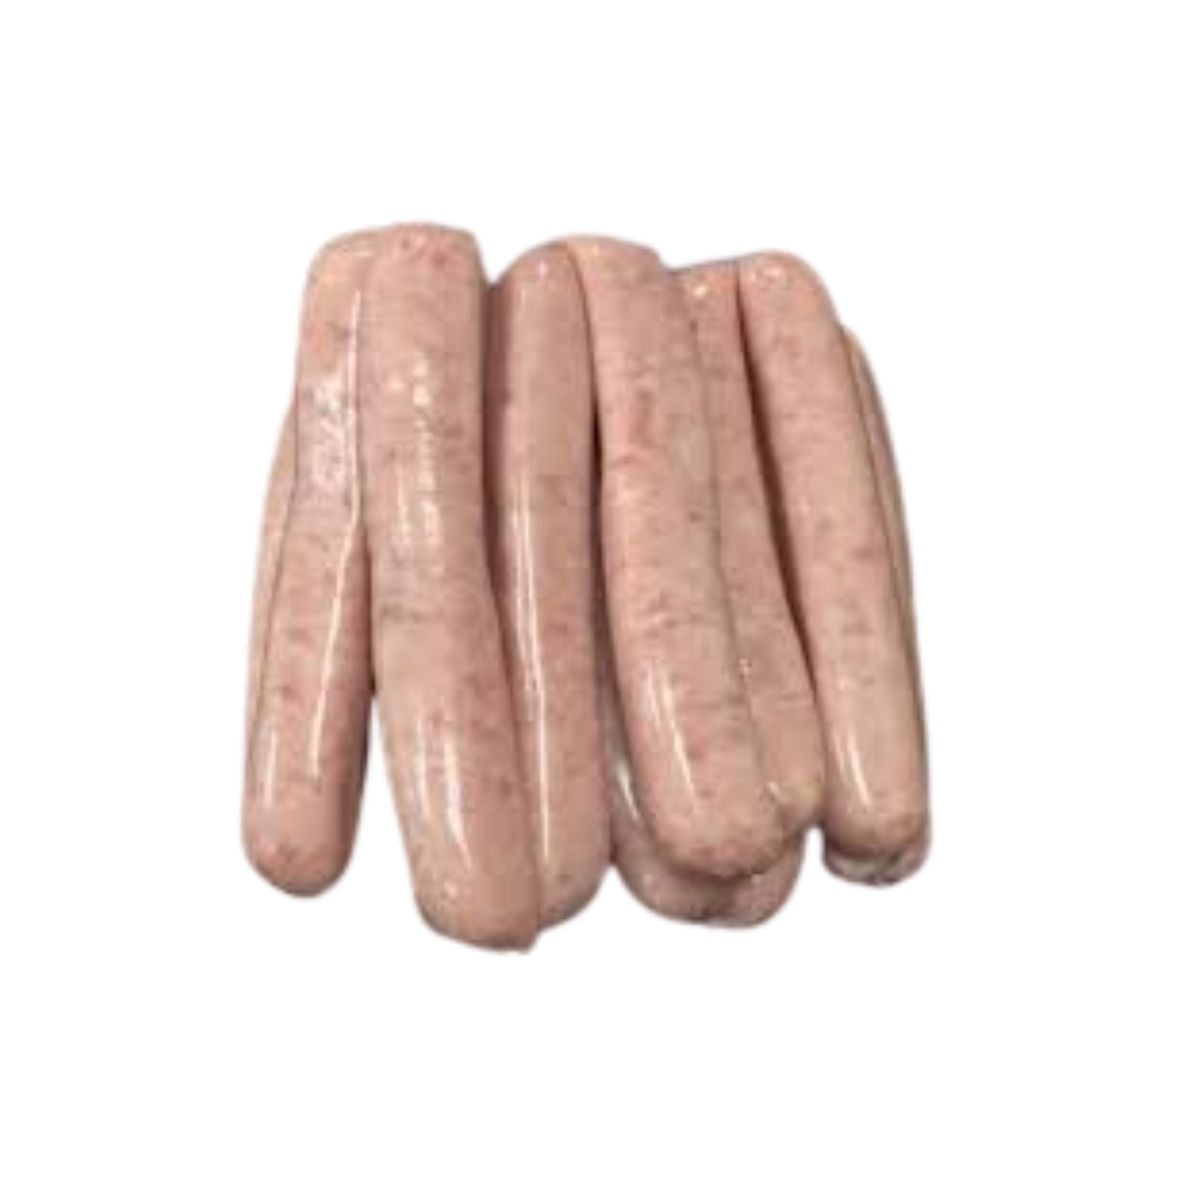 Sausages 5lb bag variety of sizes - CMKfoods